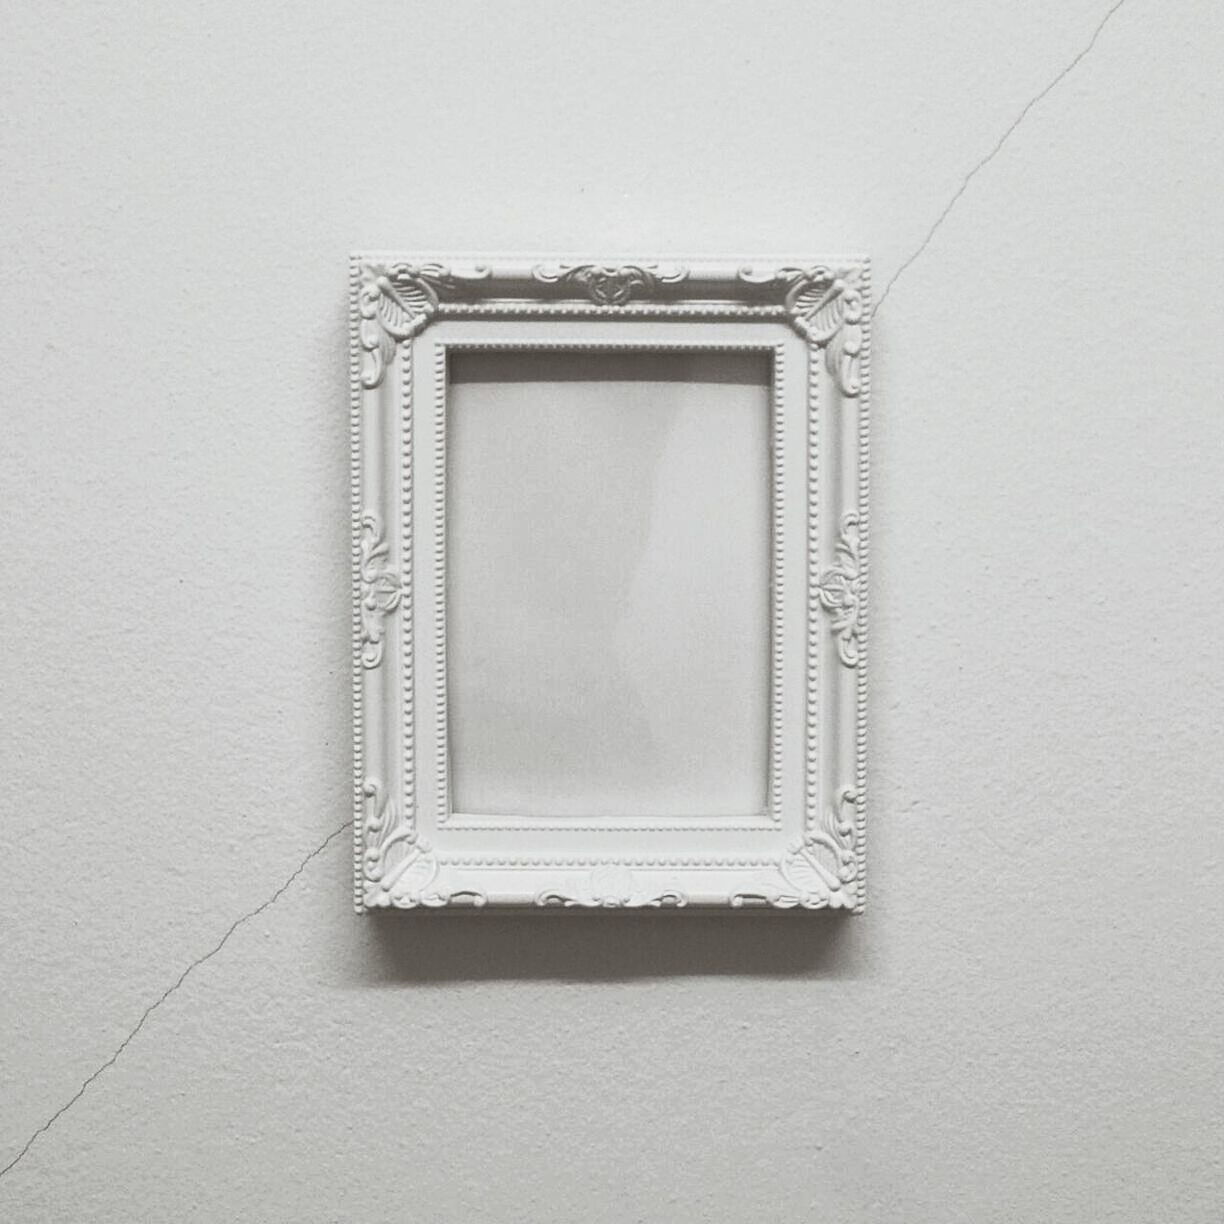 Frame on white wall